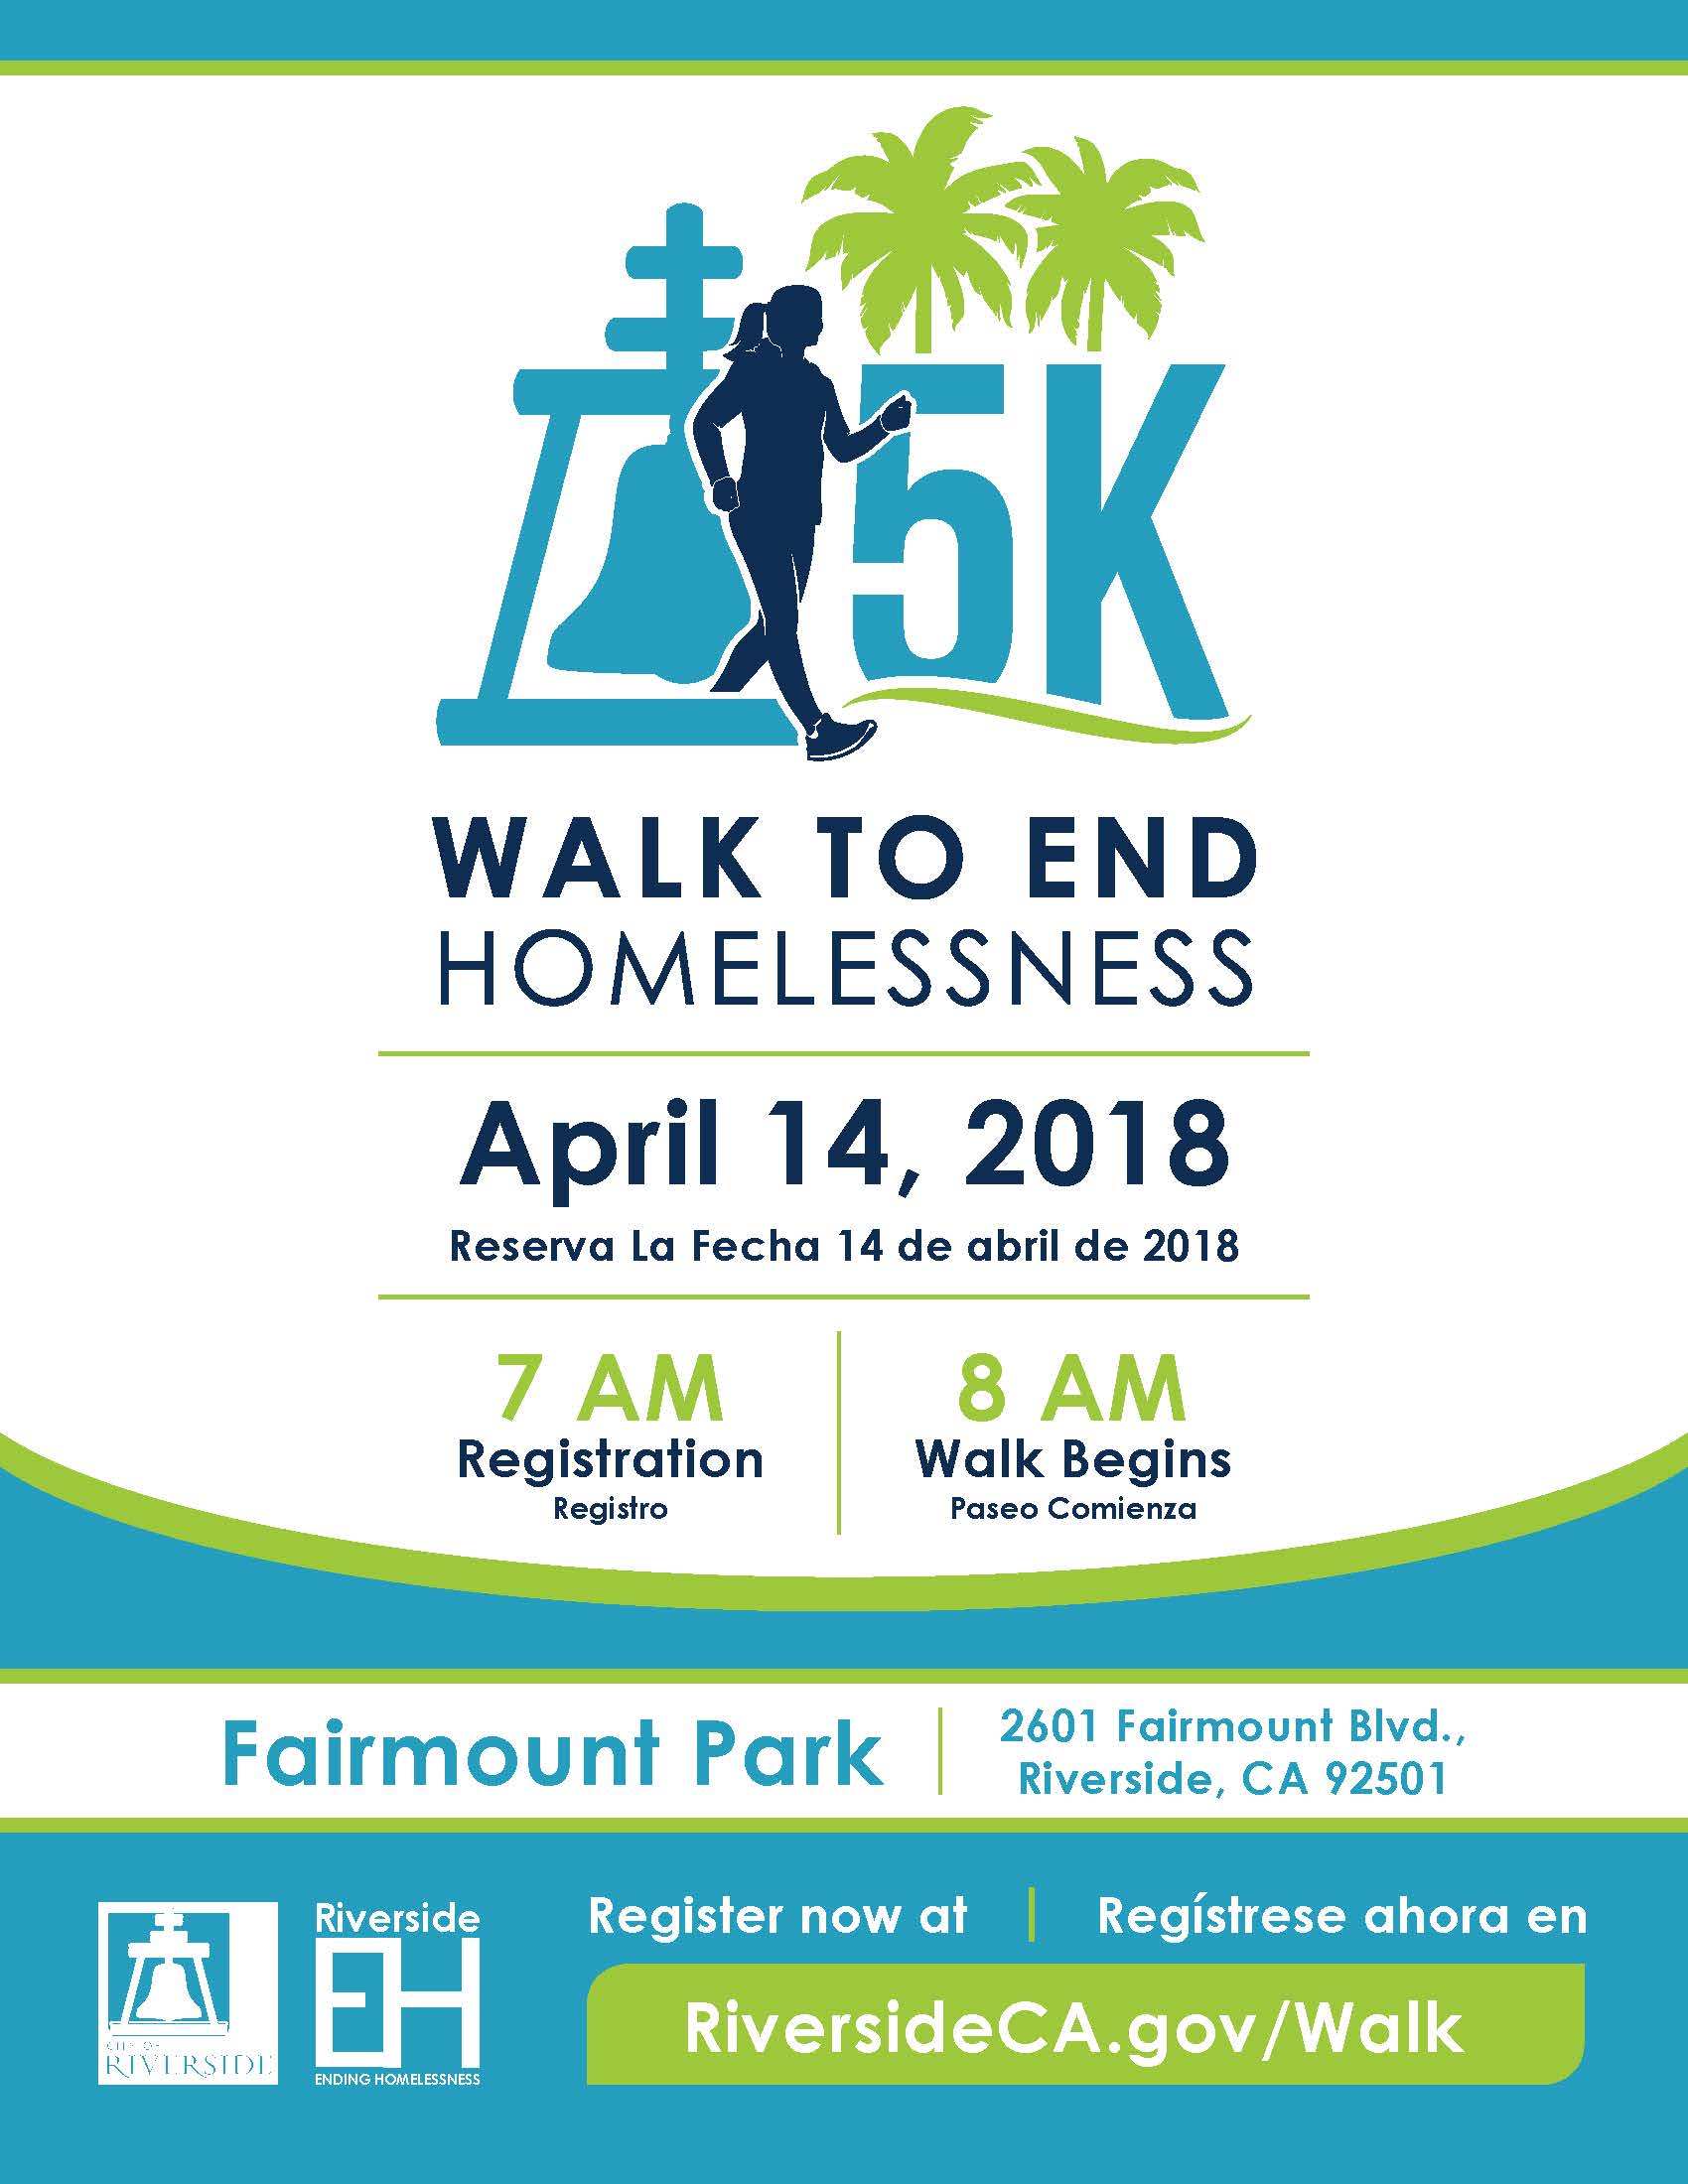 walk to end homelessness flyer, April 14, 2018 at Fairmount Park